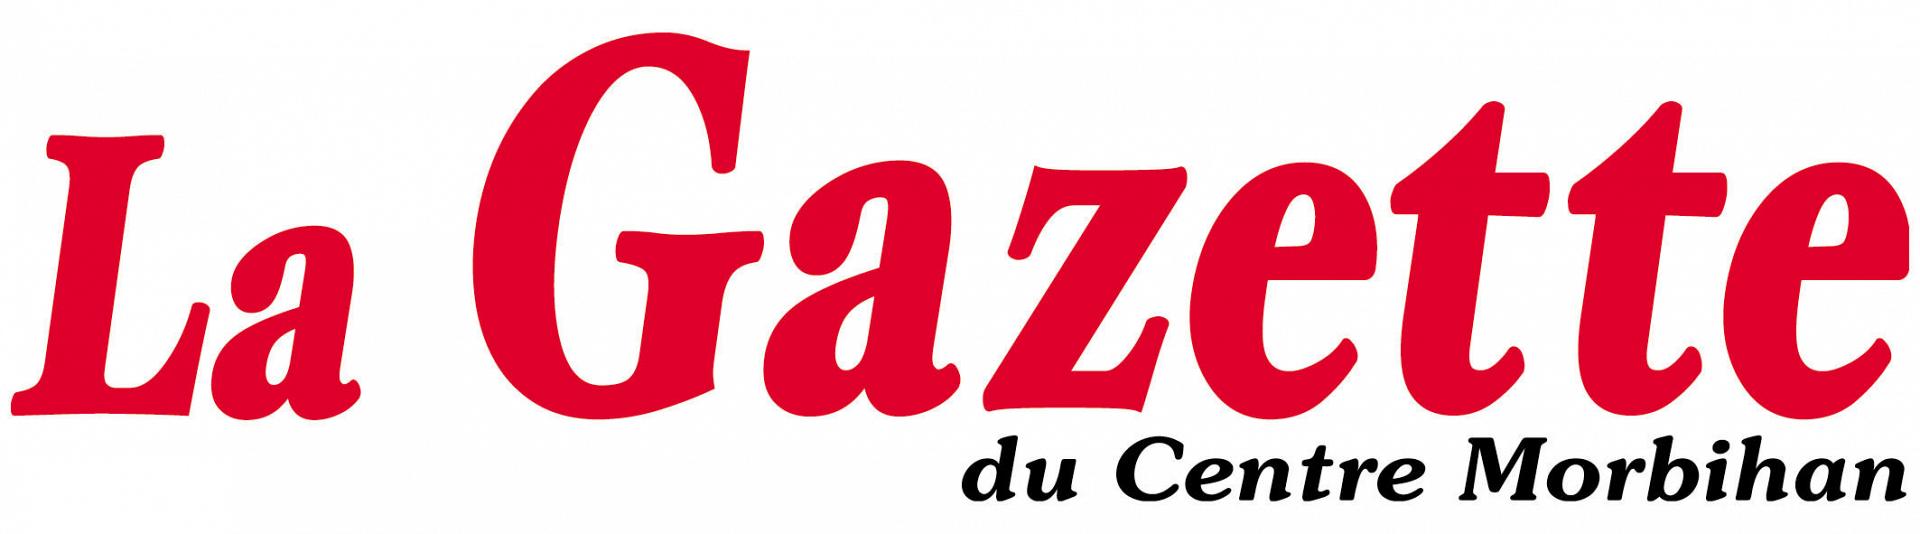 Logo La Gazette du Centre Morbihan